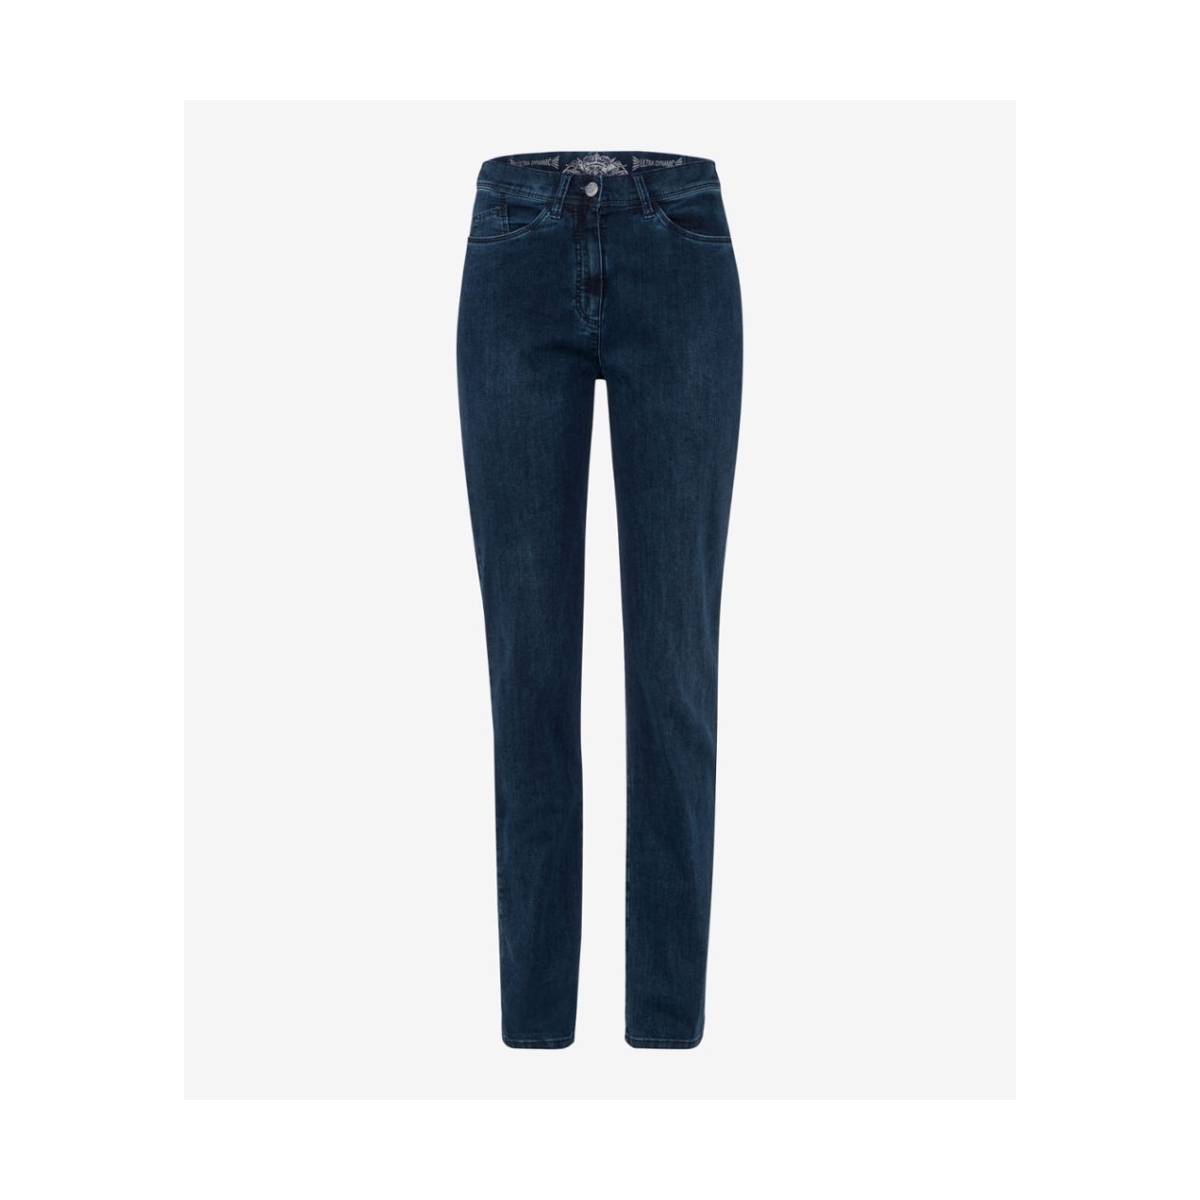 RAPHAELA  broeken jeans -  model 10-6520 10910920 - Dameskleding broeken jeans